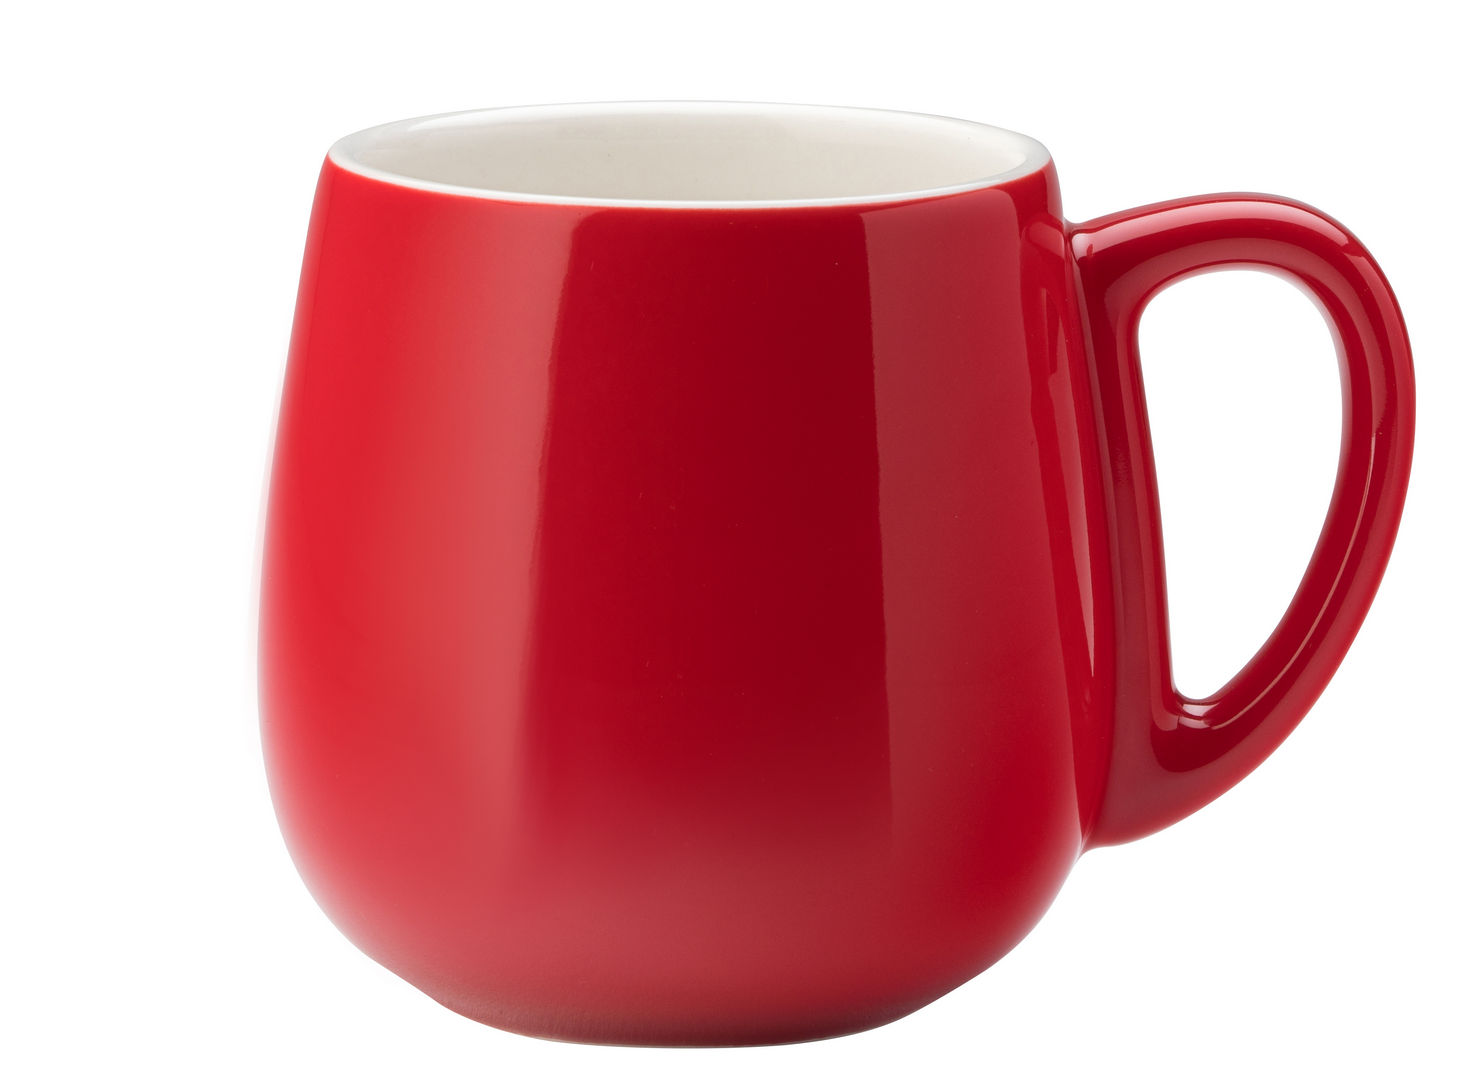 Barista Red Mug 15oz (42cl) - CT9026-000000-B01006 (Pack of 6)